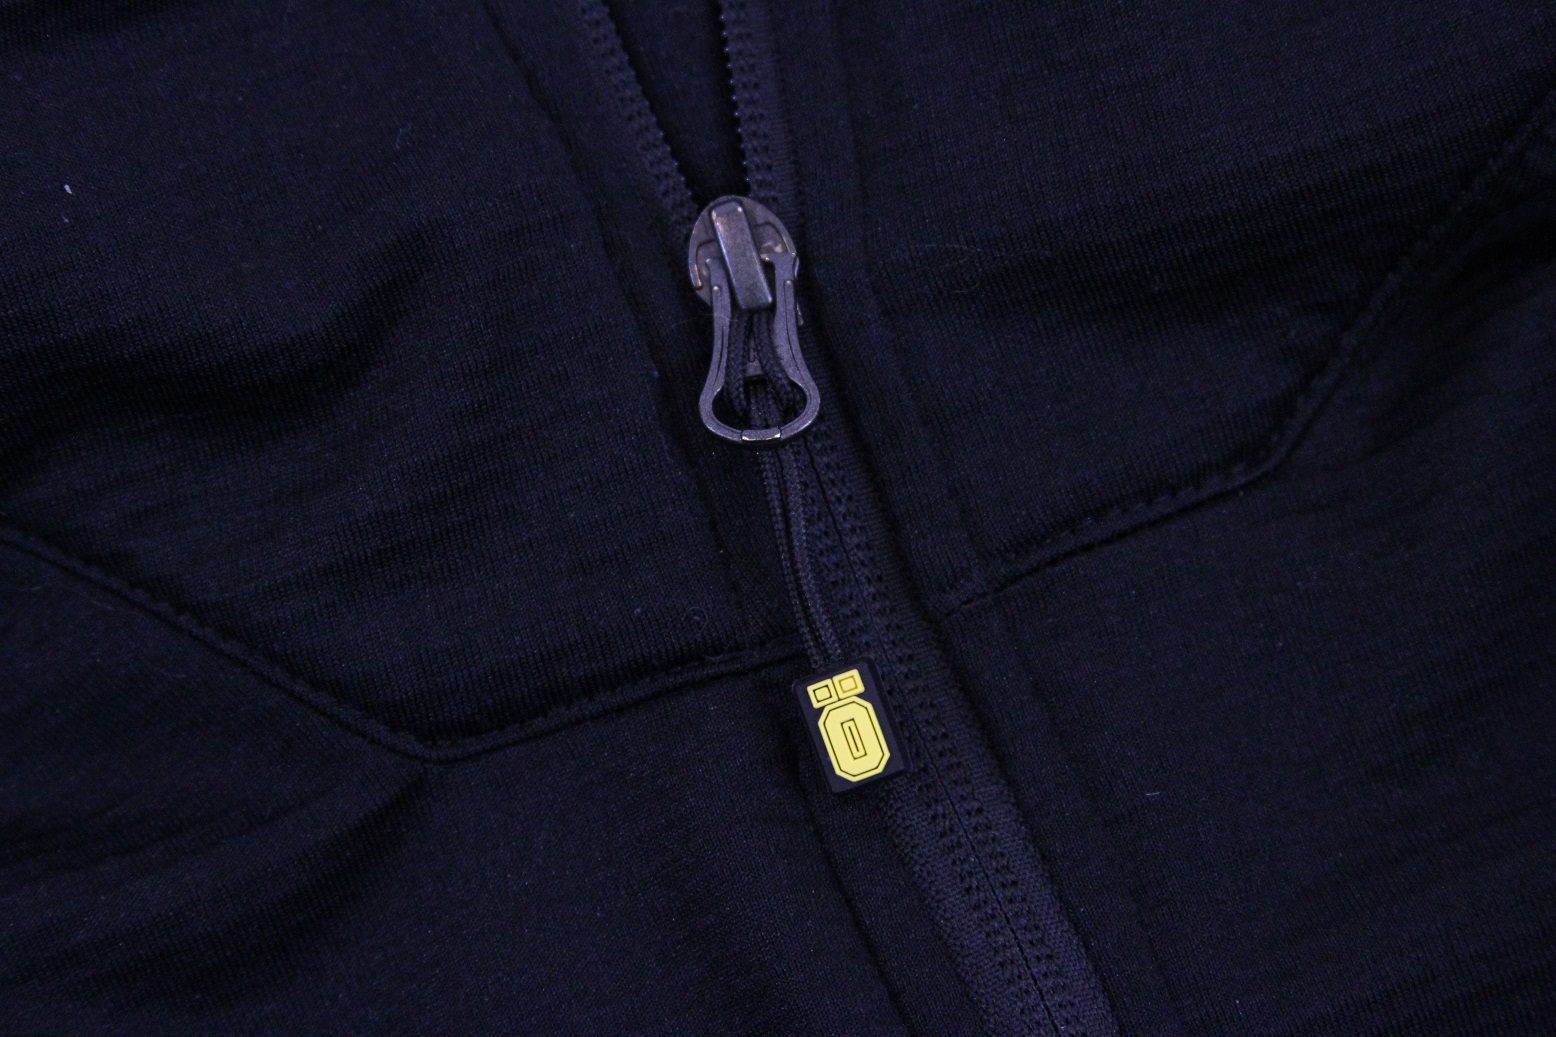 Ö Zipper Pull | Öhlins USA